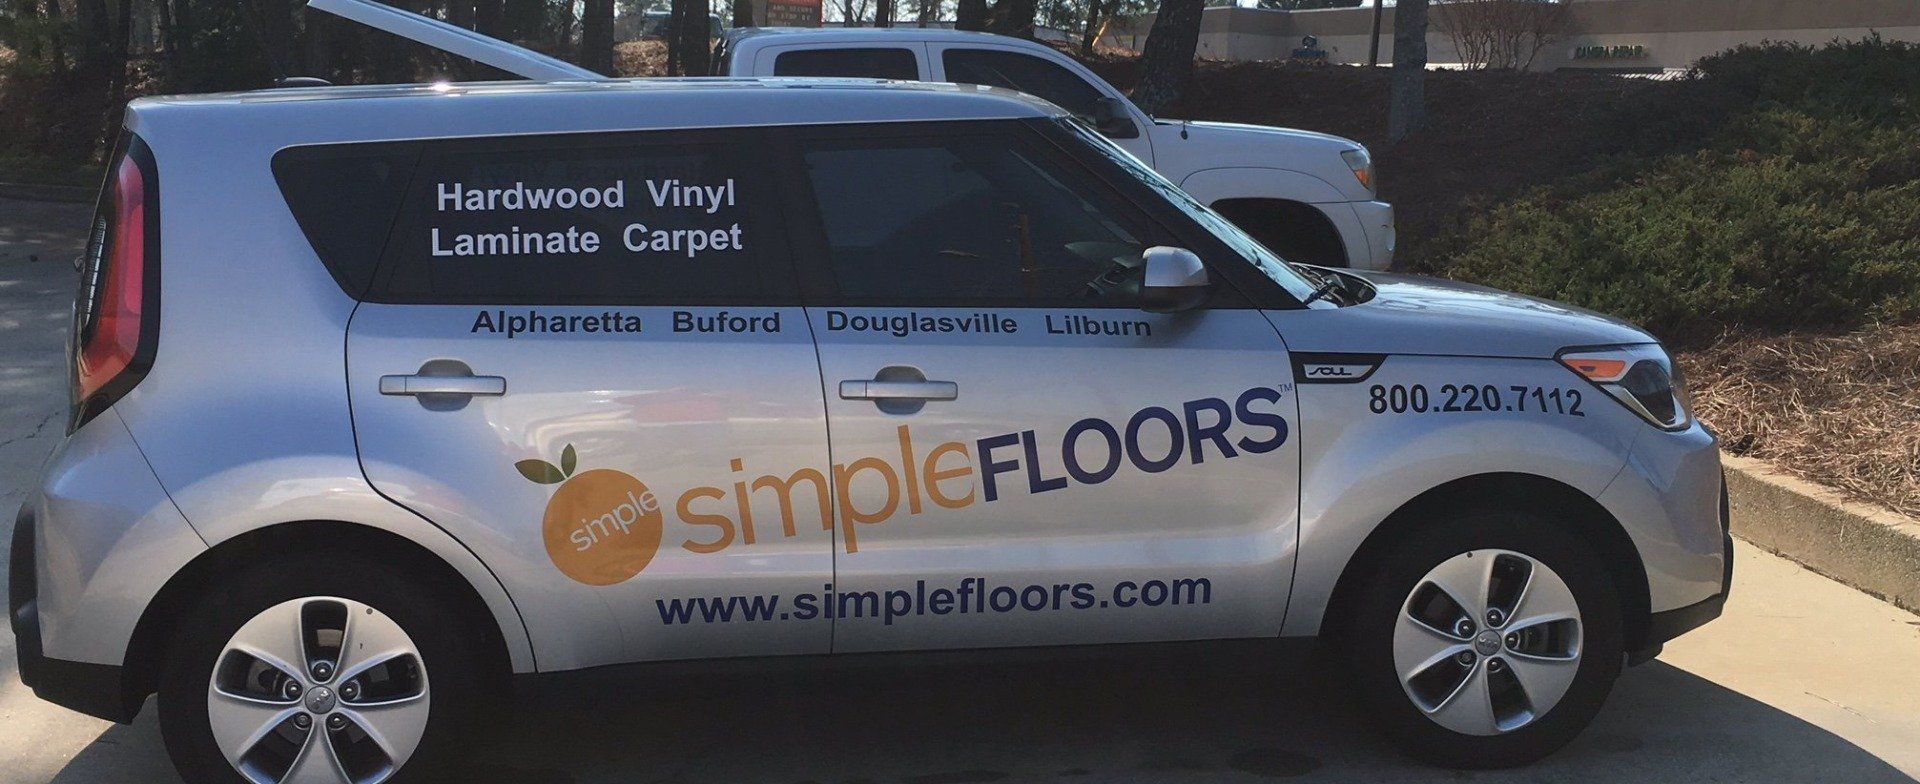 Simple Floors Vehicle Wrap